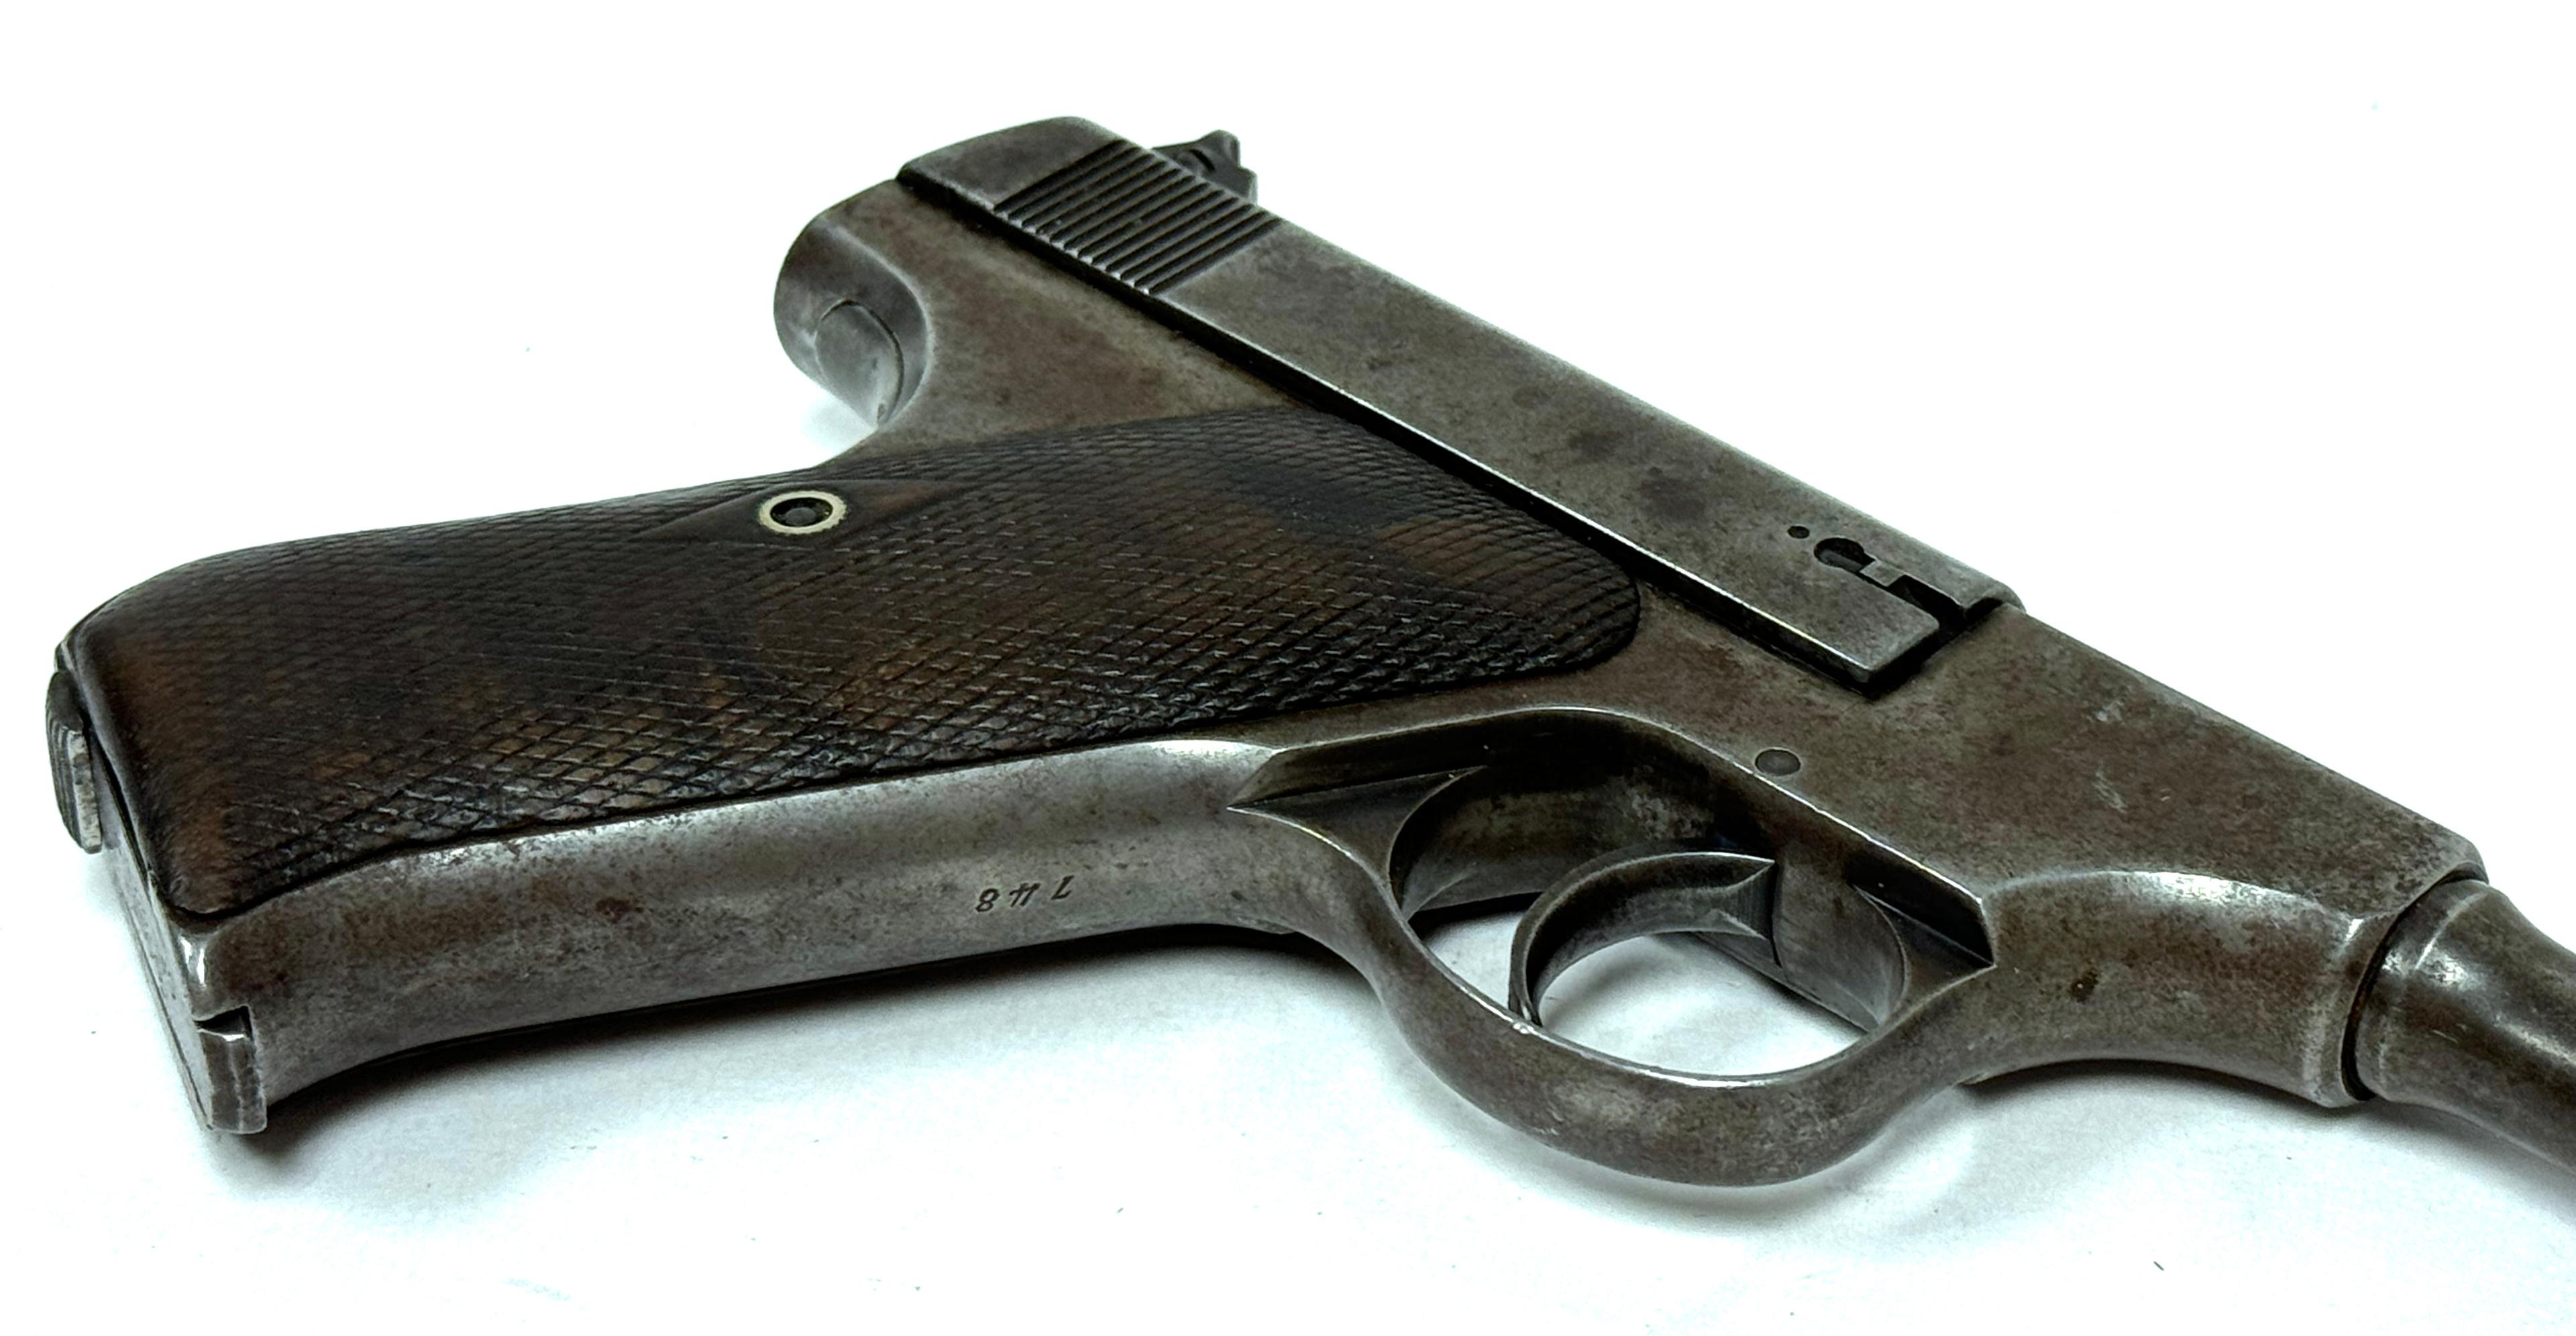 Early 1915 3-Digit Colt .22 Automatic PRE-WOODSMAN Pistol